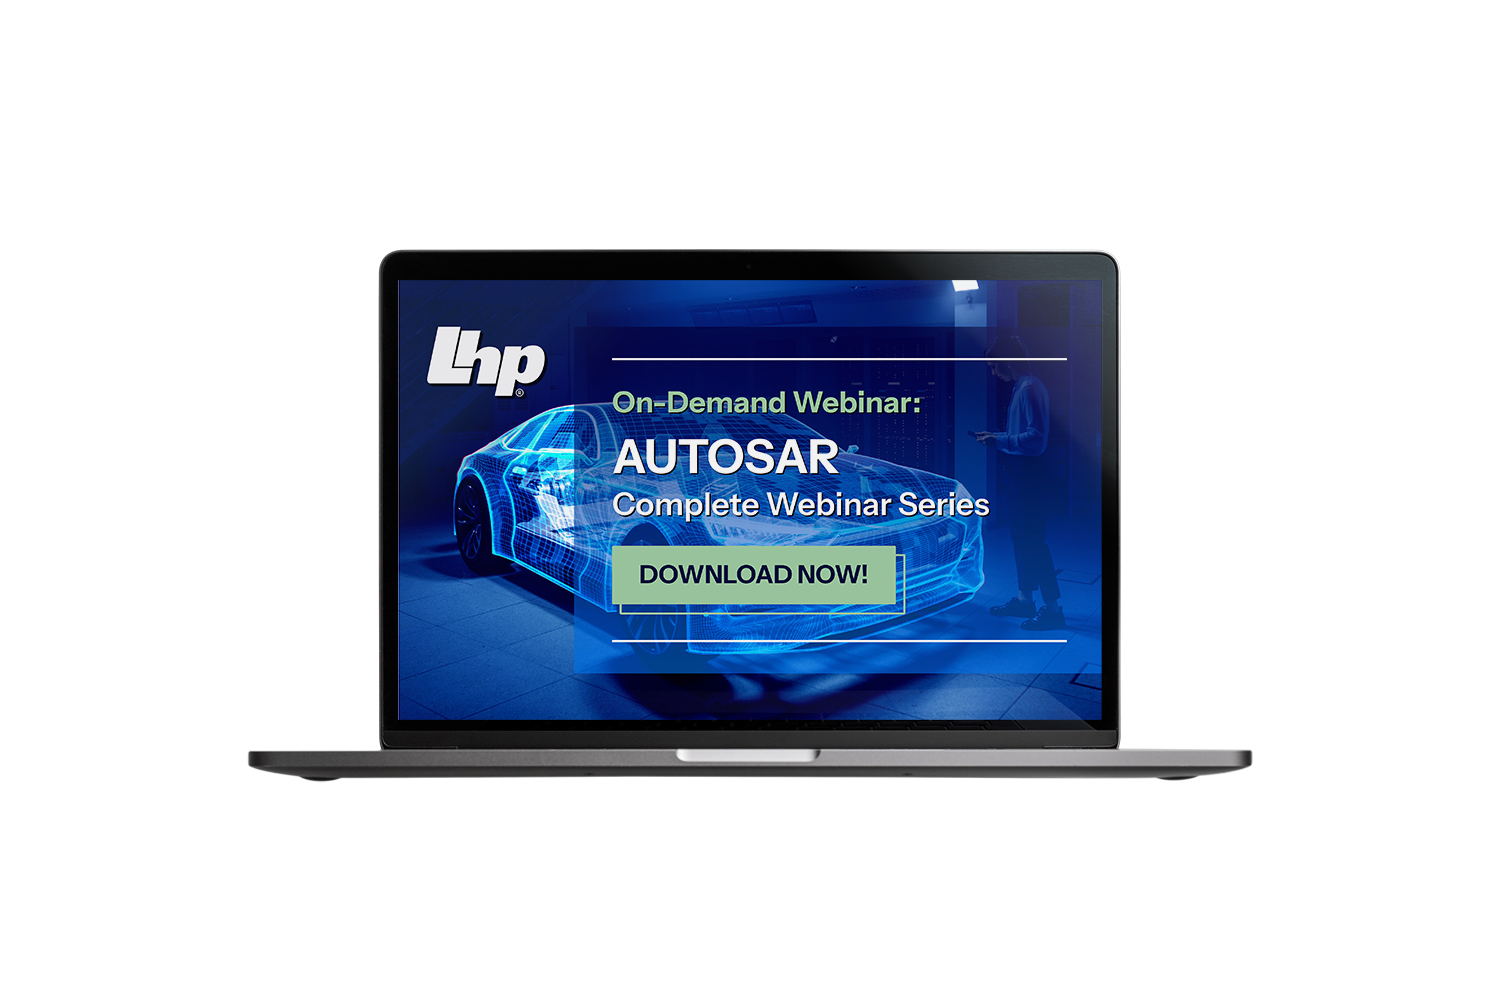 LSS-Mockup-on-demand-webinar-AUTOSAR-Complete-Series-01